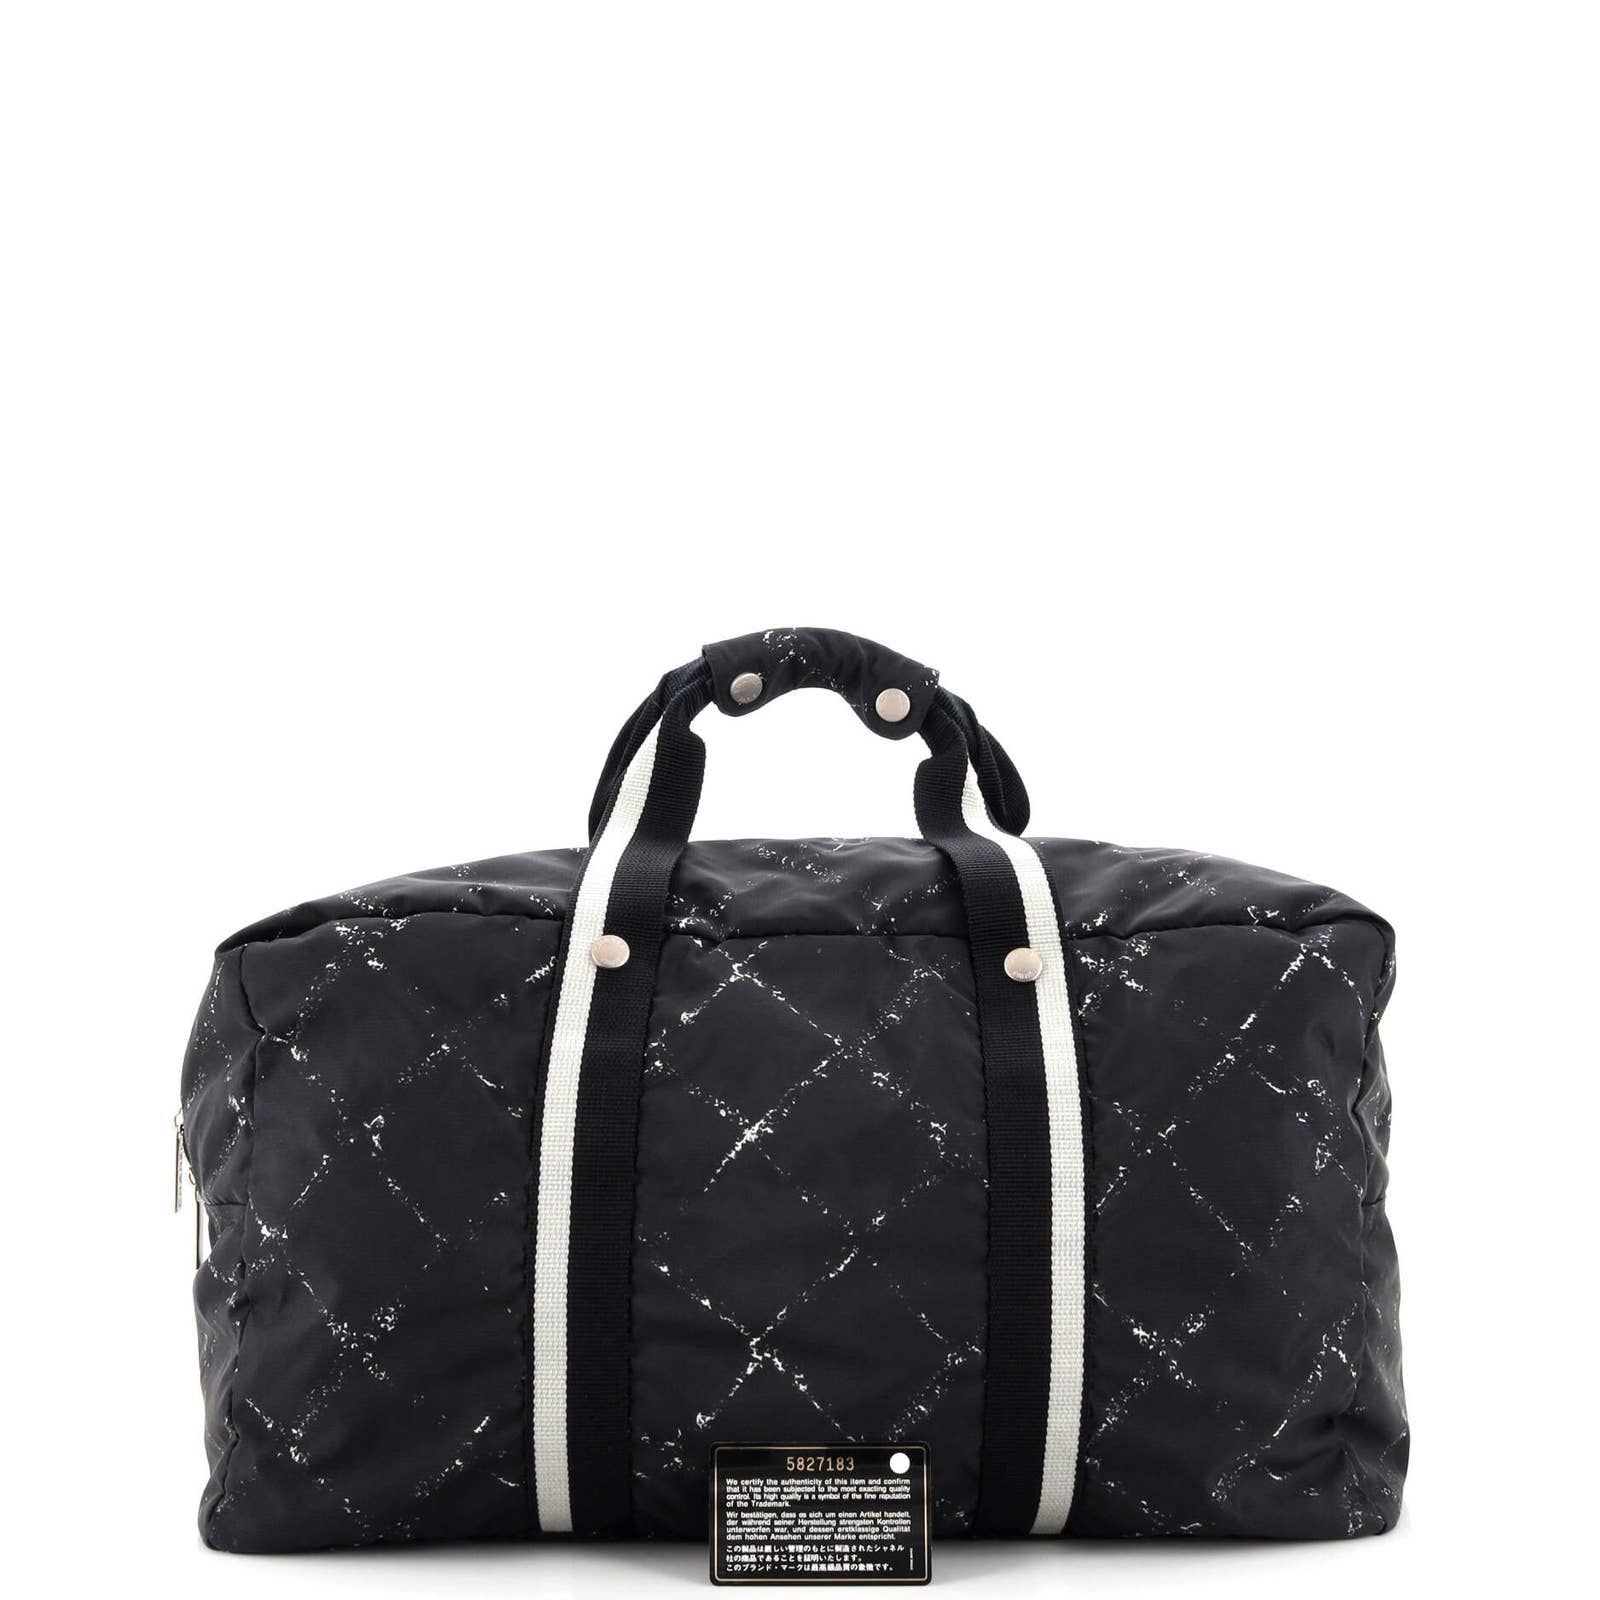 Chanel Travel Line Duffle Bag Printed Nylon Large